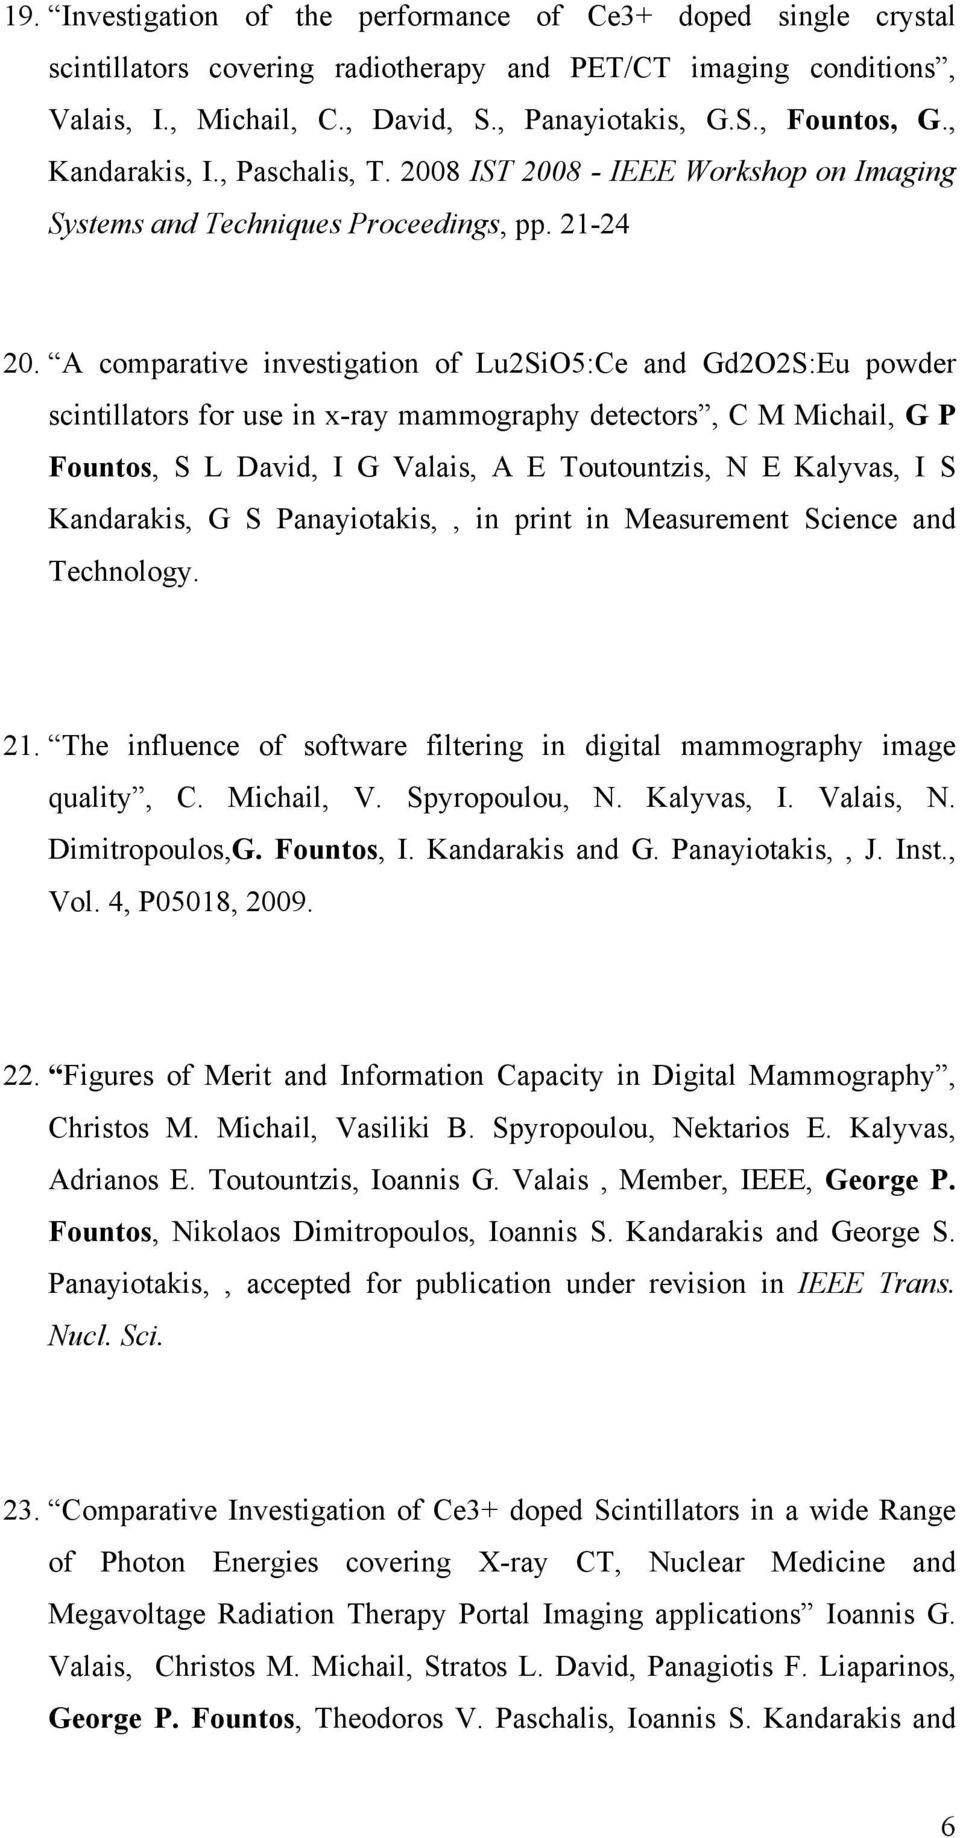 A comparative investigation of Lu2SiO5:Ce and Gd2O2S:Eu powder scintillators for use in x-ray mammography detectors, C M Michail, G P Fountos, S L David, I G Valais, A E Toutountzis, N E Kalyvas, I S